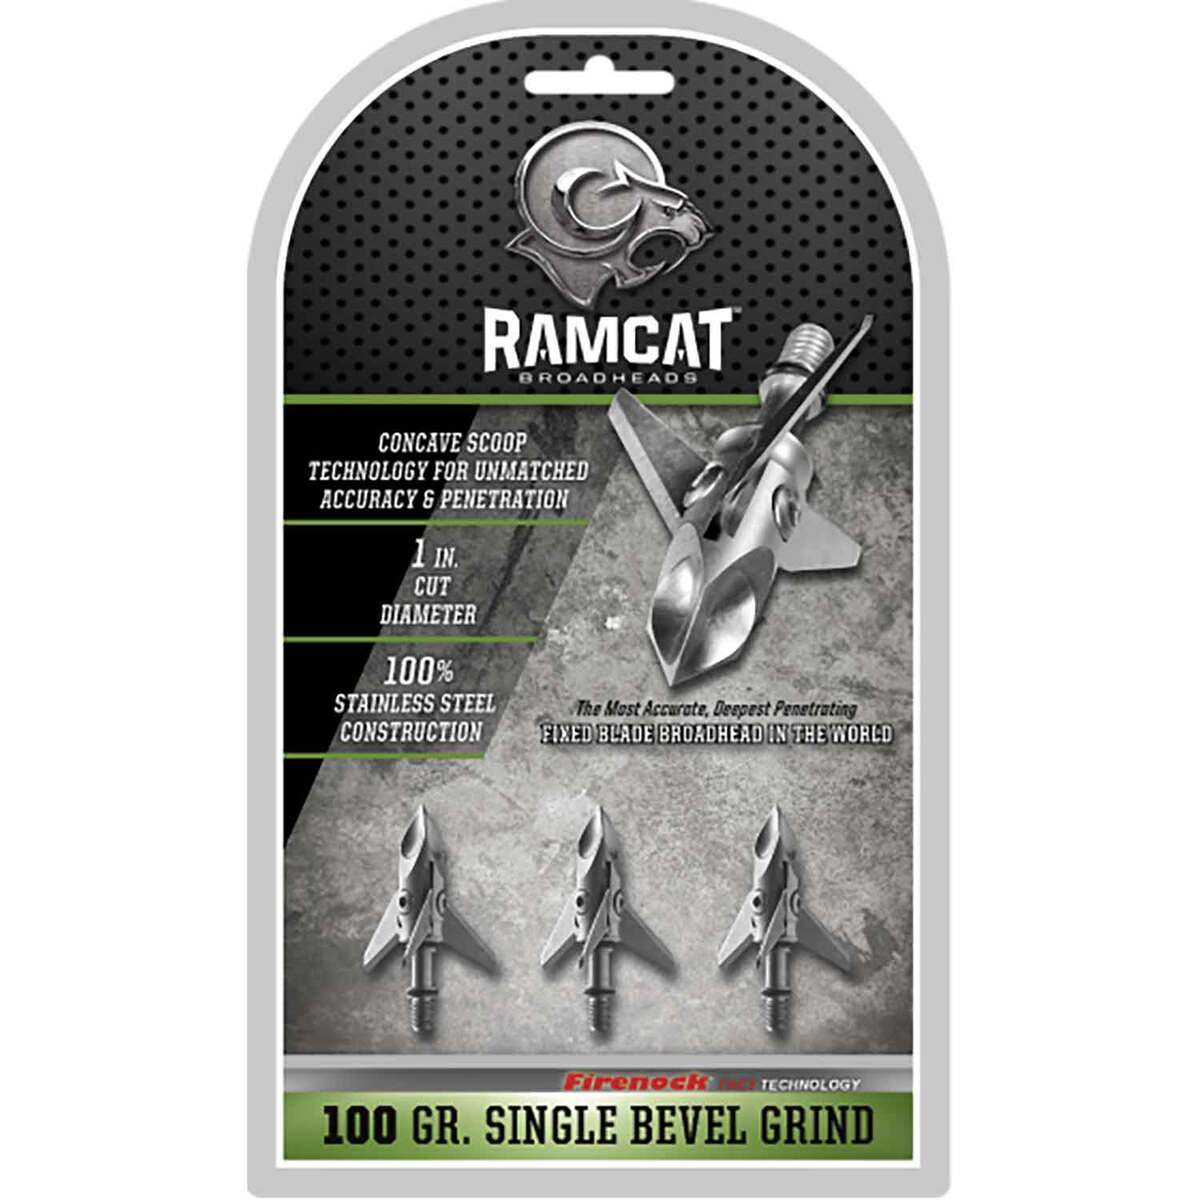 Ramcat Single Bevel Grind 100gr Fixed Broadhead 3 Pack Sportsmans Warehouse 7657